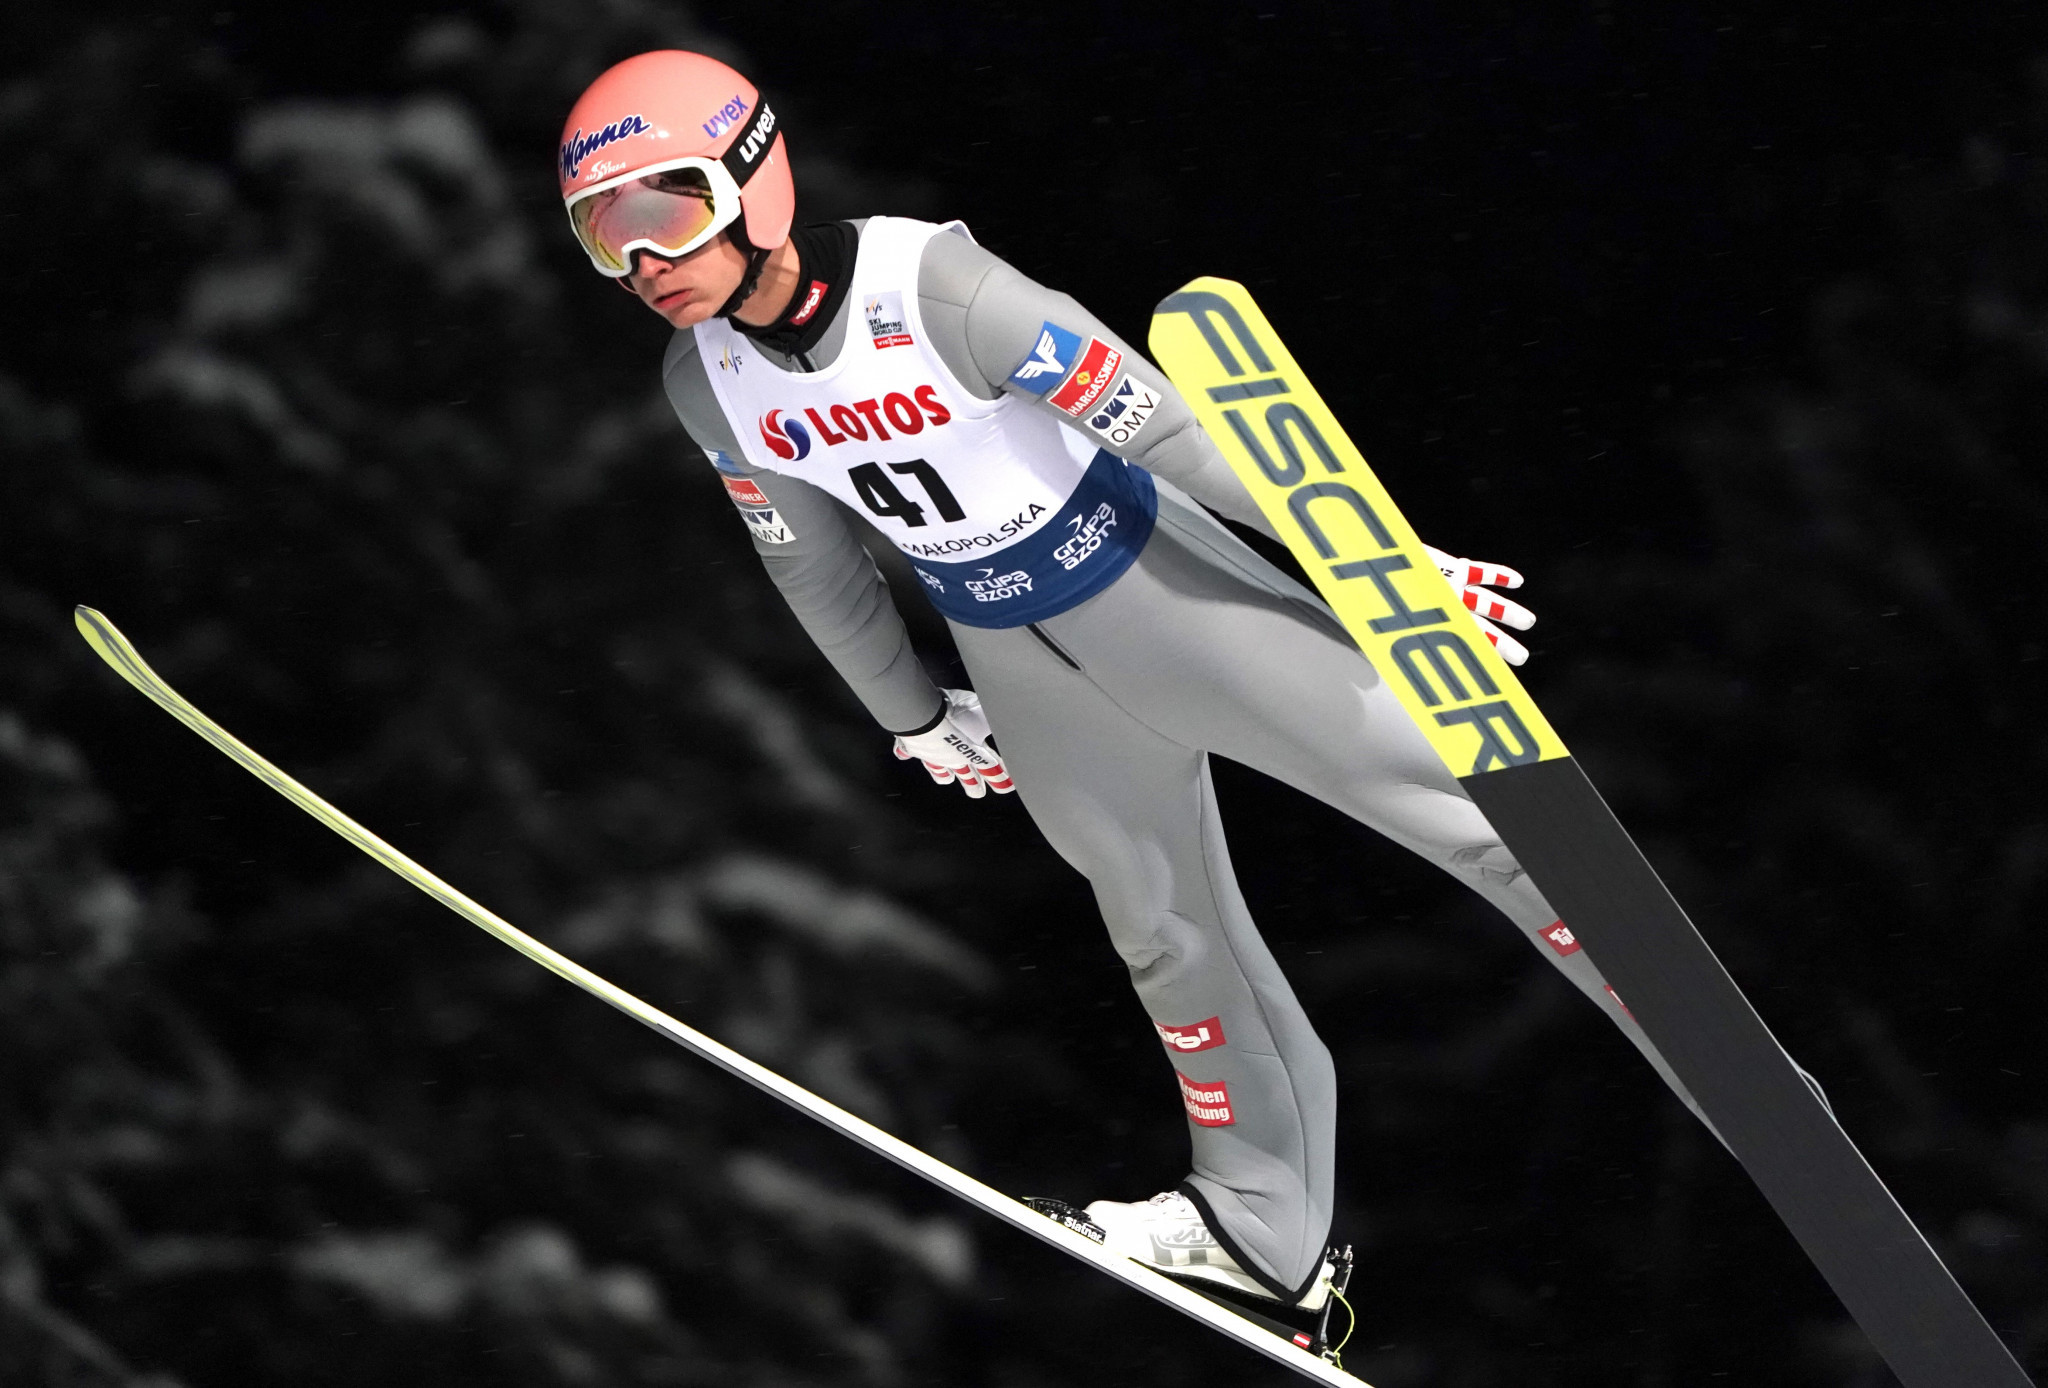 Austria win mens team event at FIS Ski Jumping World Cup in Zakopane